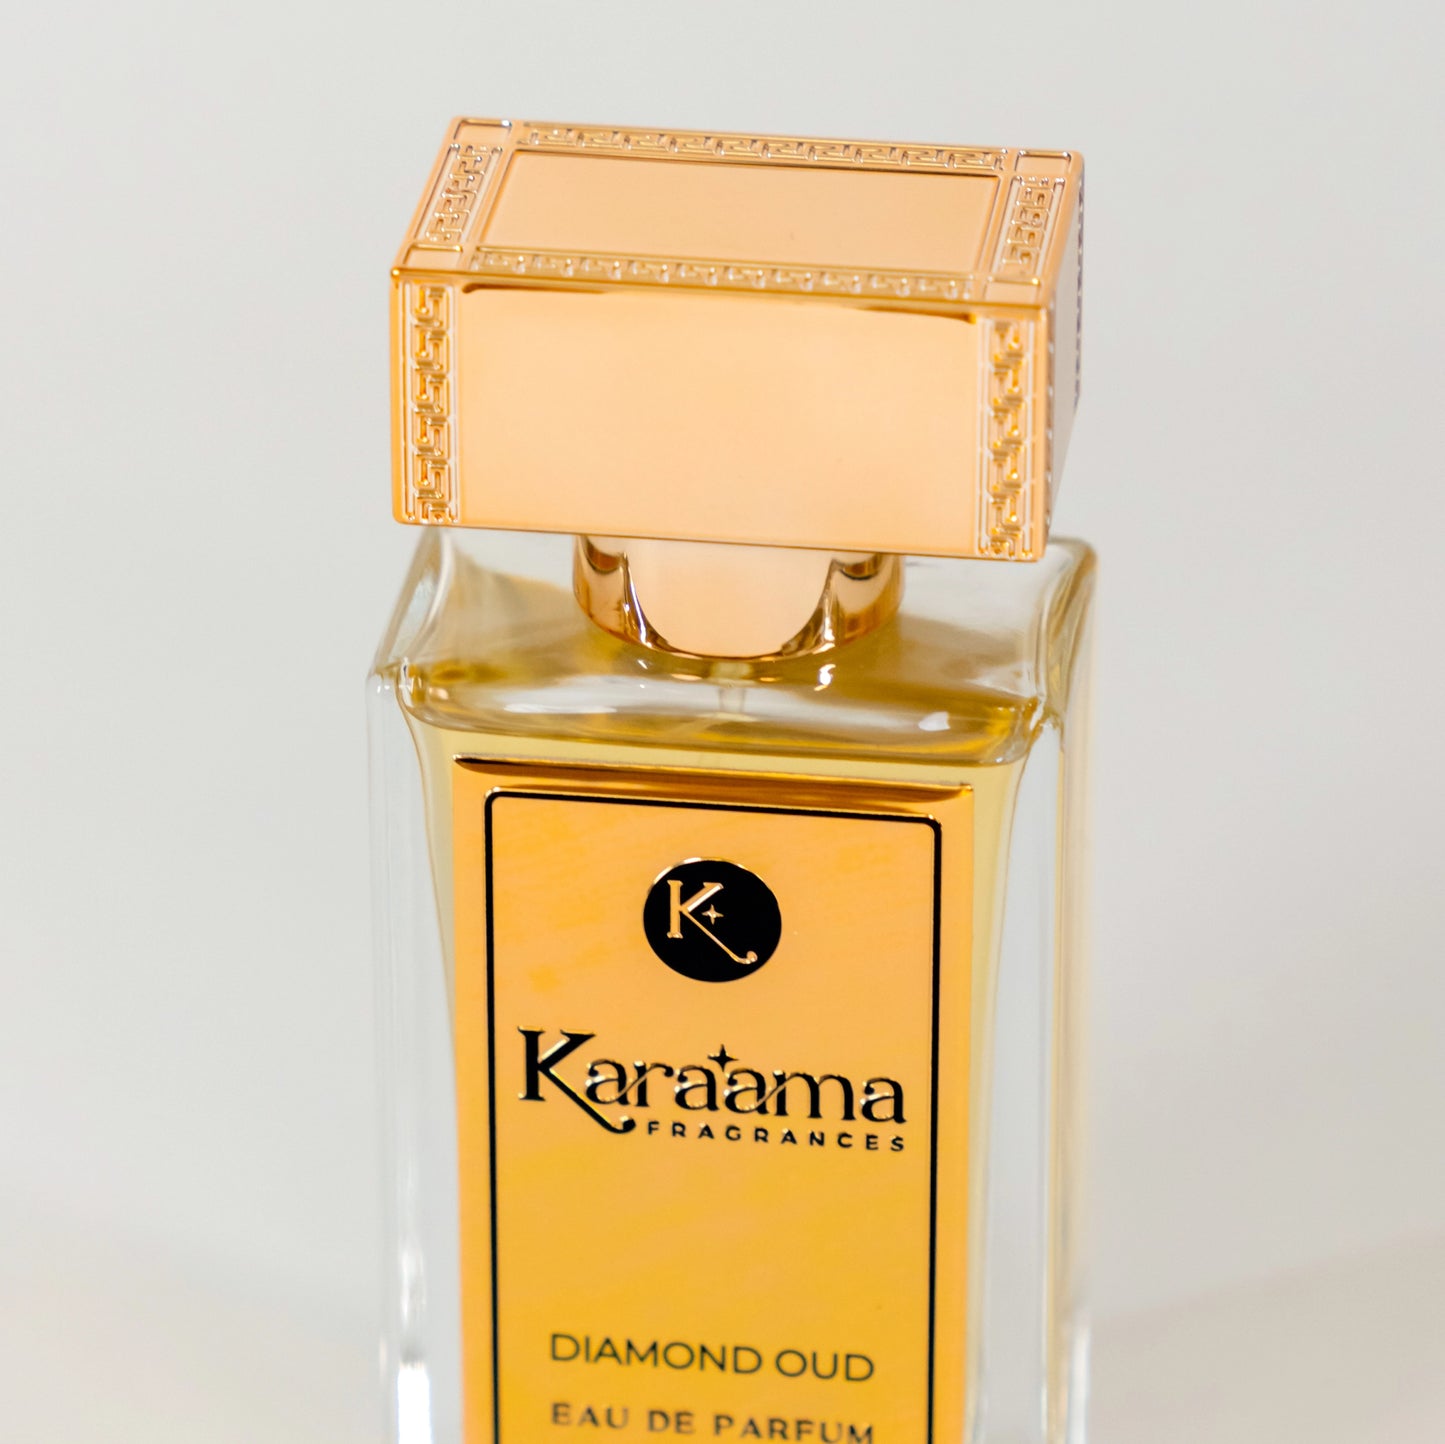 Elegant Karatama Diamond Oud Eau de Parfum bottle with ornate gold cap, a luxurious and trending fragrance choice. Perfect for enhancing style and sophistication. #LuxuryPerfume #EauDeParfum #Karatama #TrendingFragrance #StyleAccessorizing